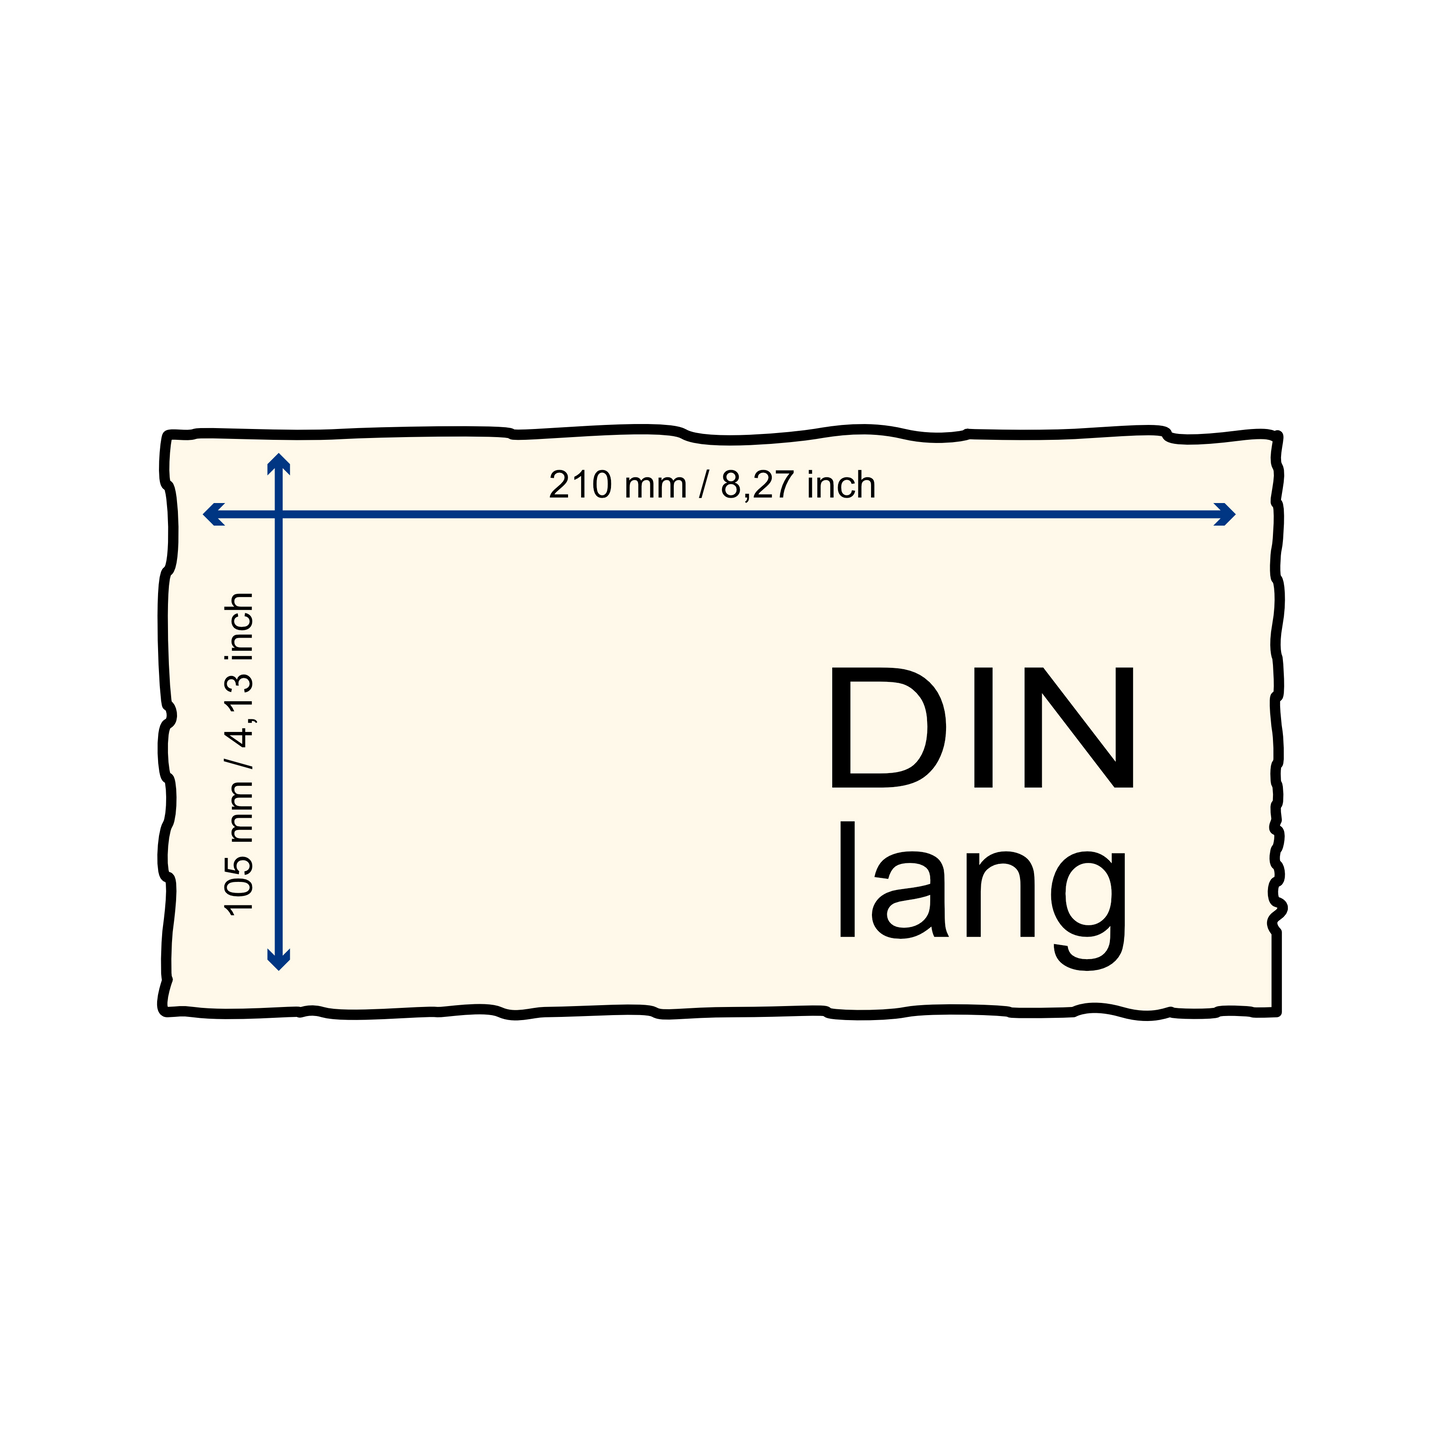 Sonderedition: Sisalkarte DIN-lang - sisal ungefärbt